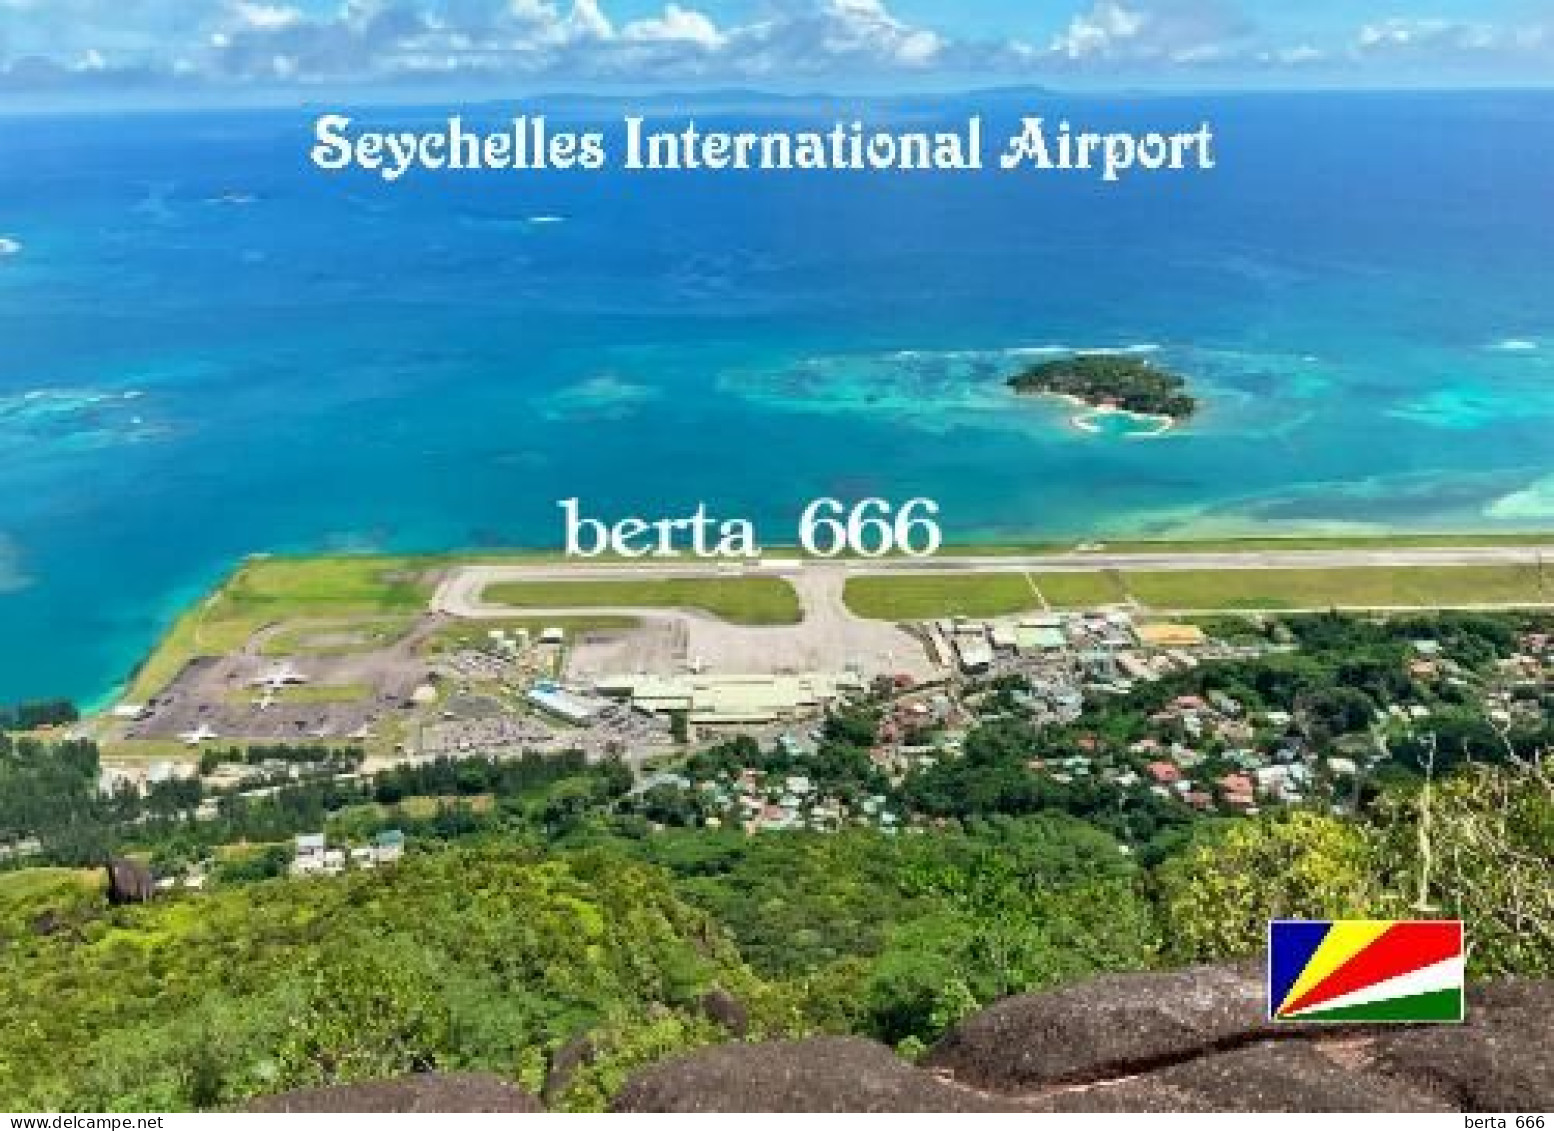 Seychelles International Airport New Postcard - Seychelles